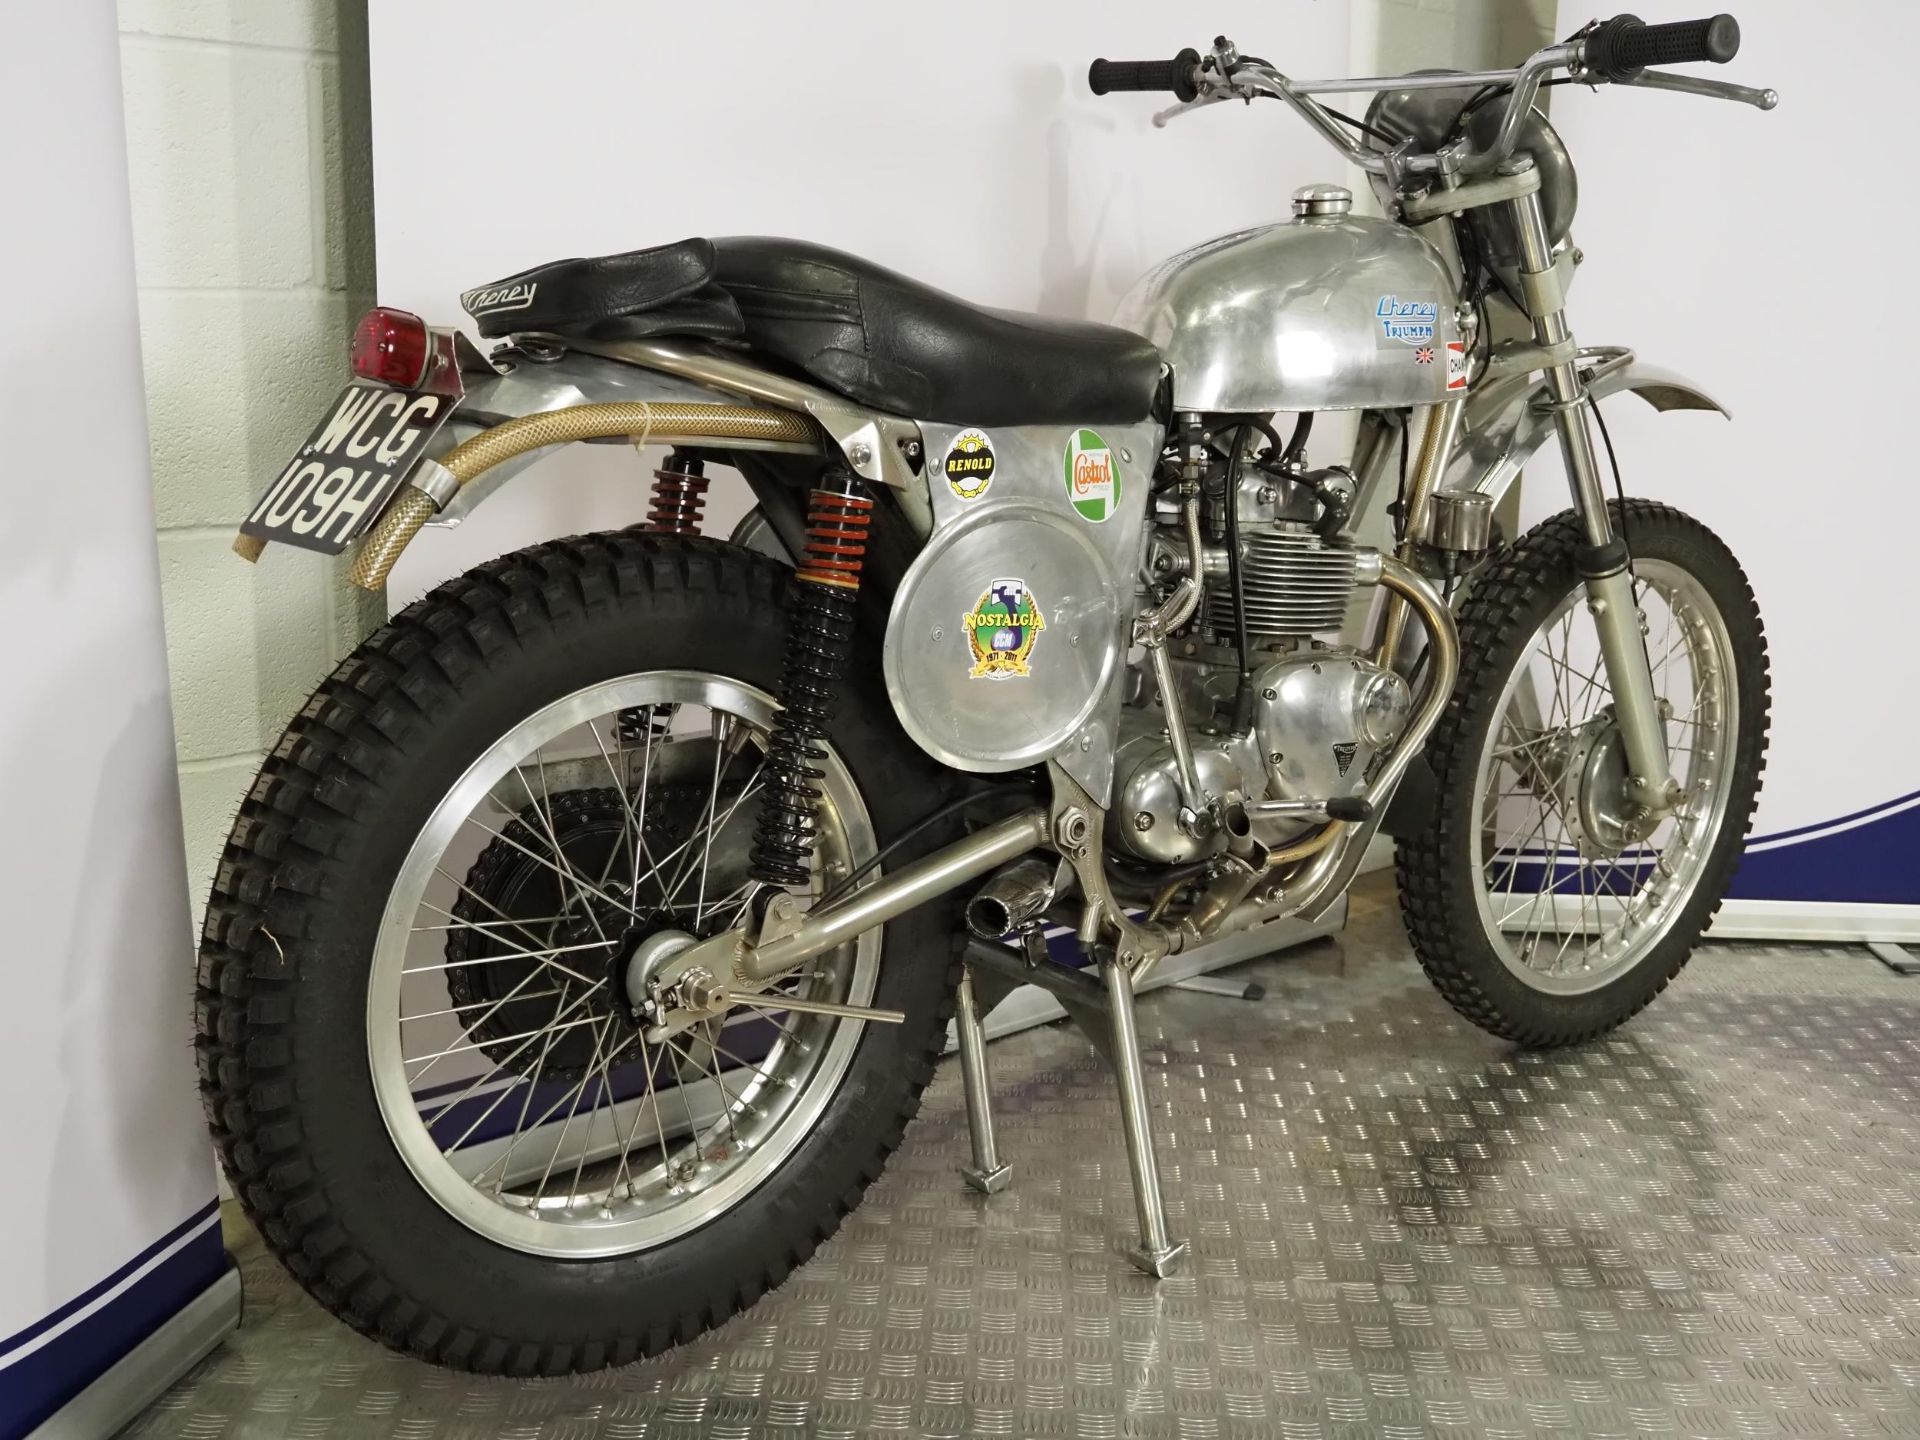 Cheney Triumph trials bike. 1970. 500cc Frame No-T109EC3679 Engine No. T100FC03679 Runs and rides, - Image 4 of 7